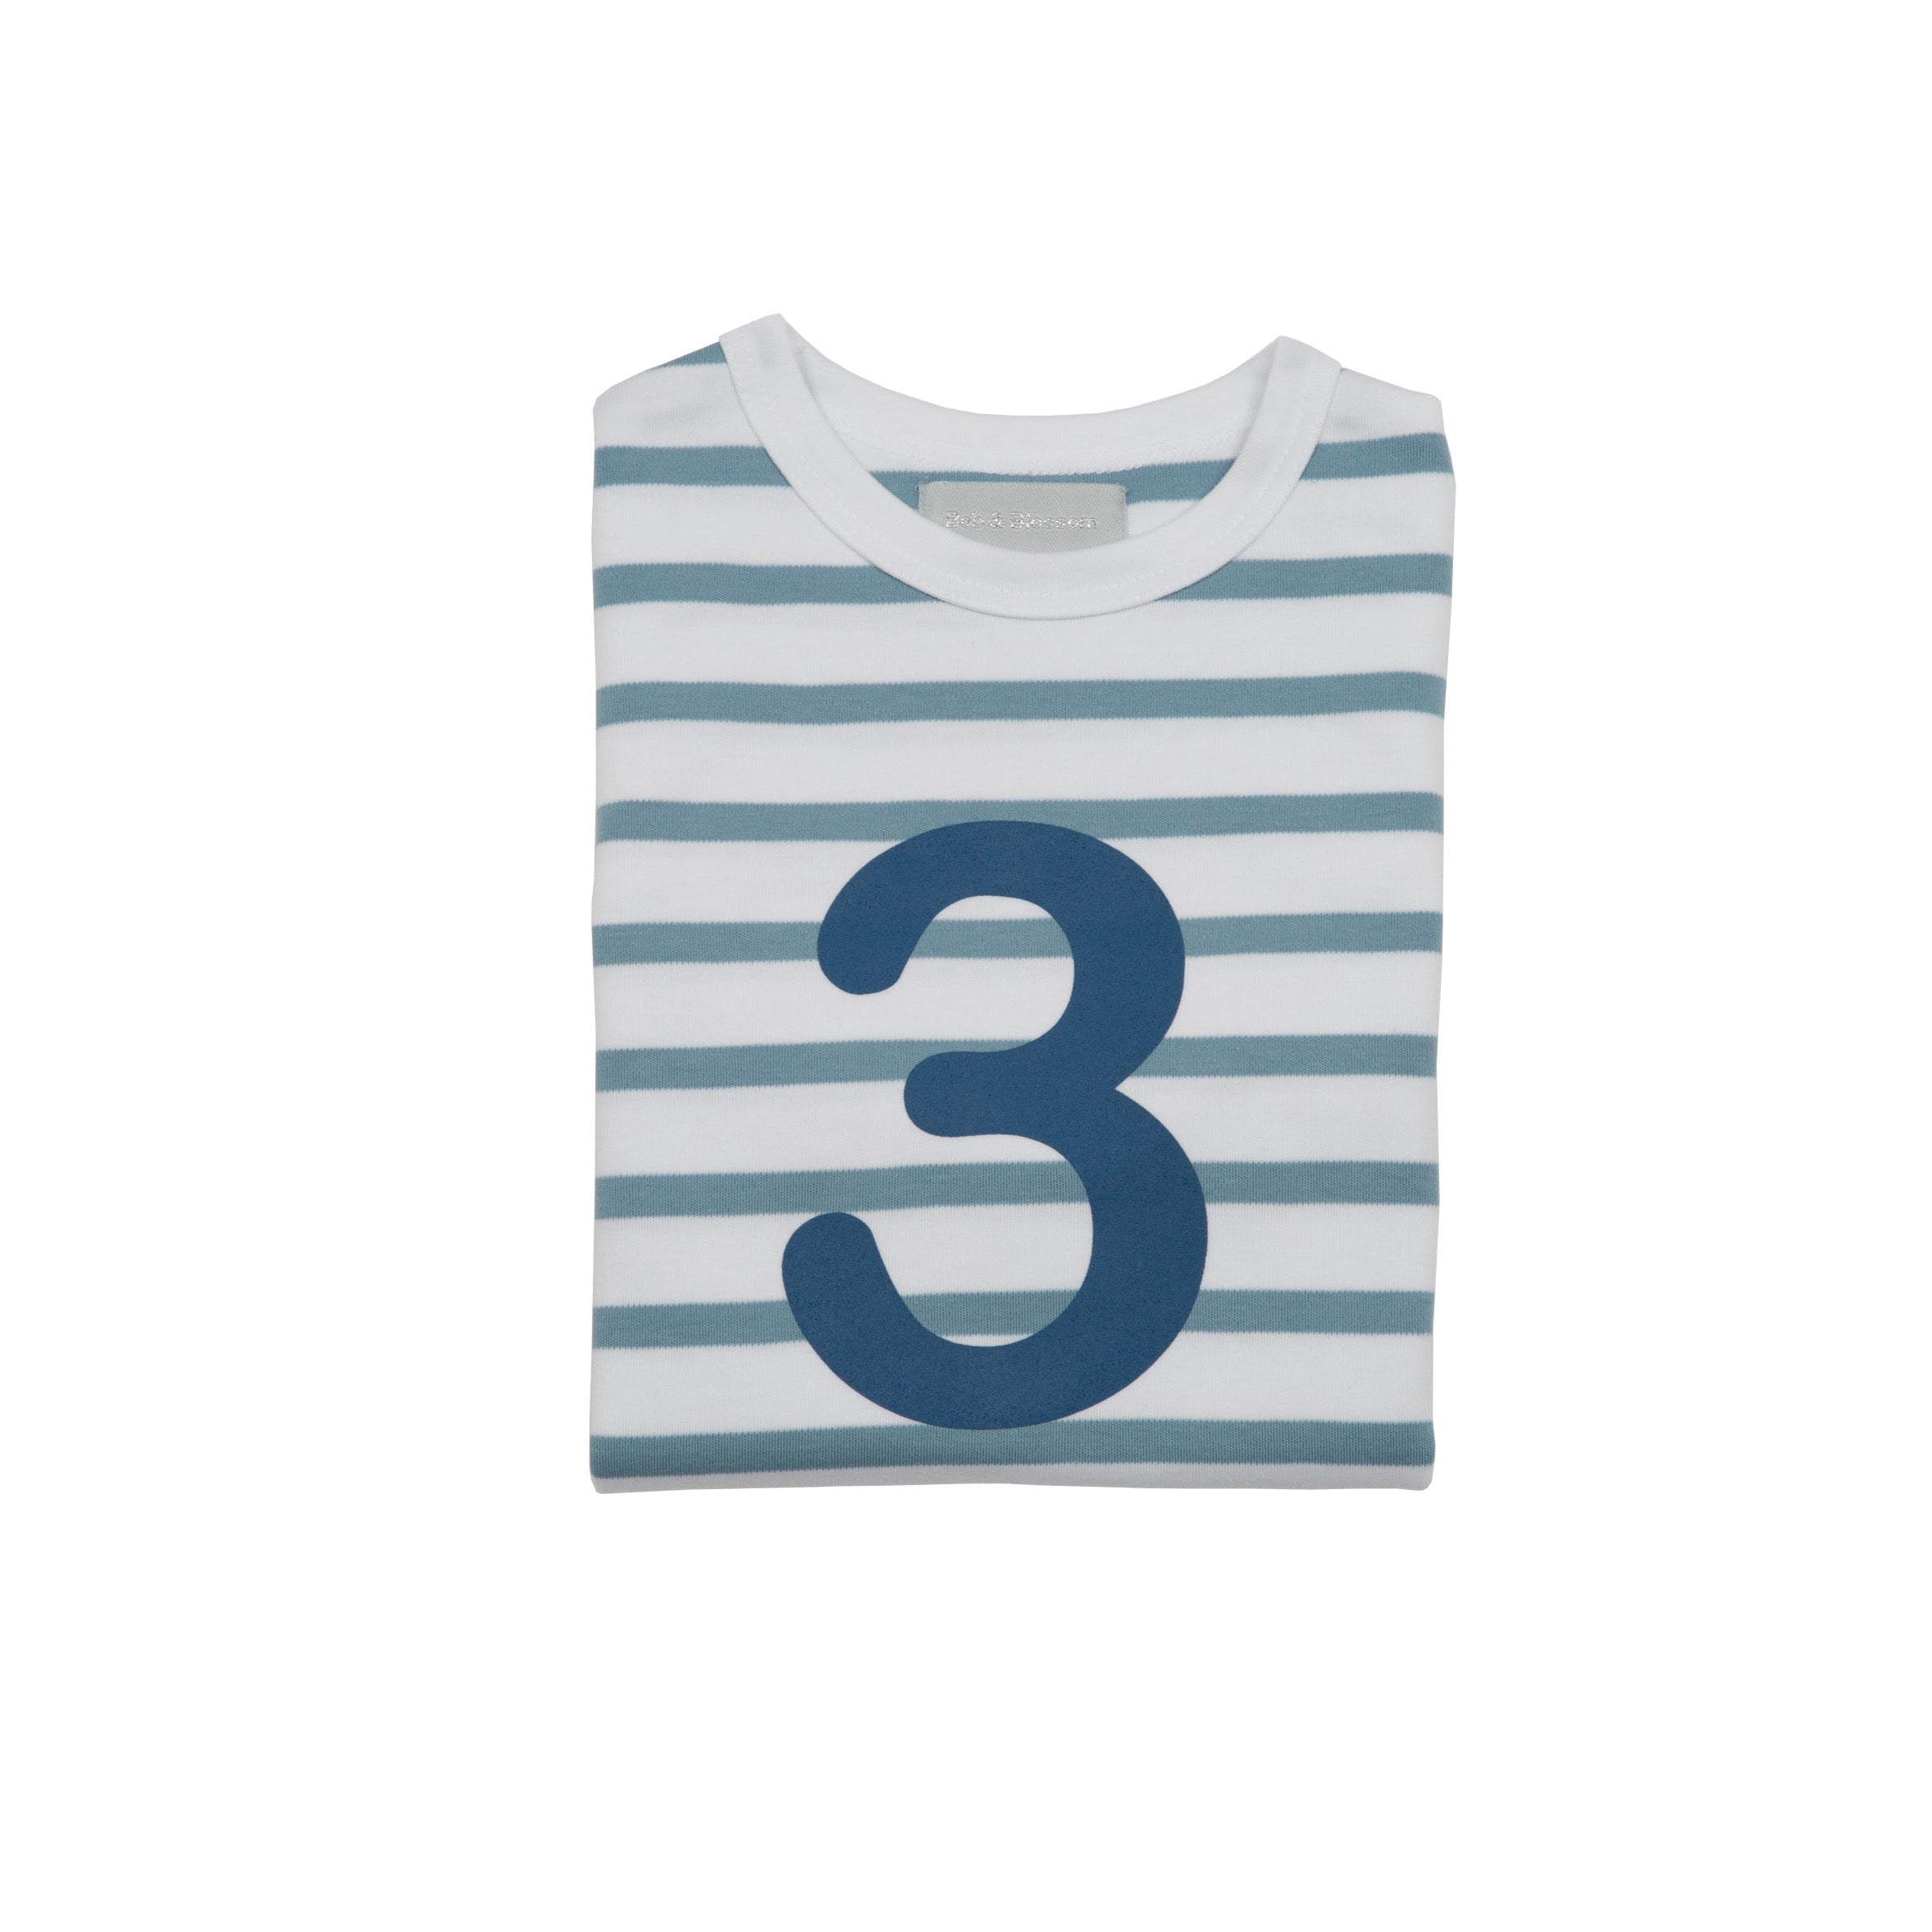 Ocean Blue & White Striped Breton Number Top